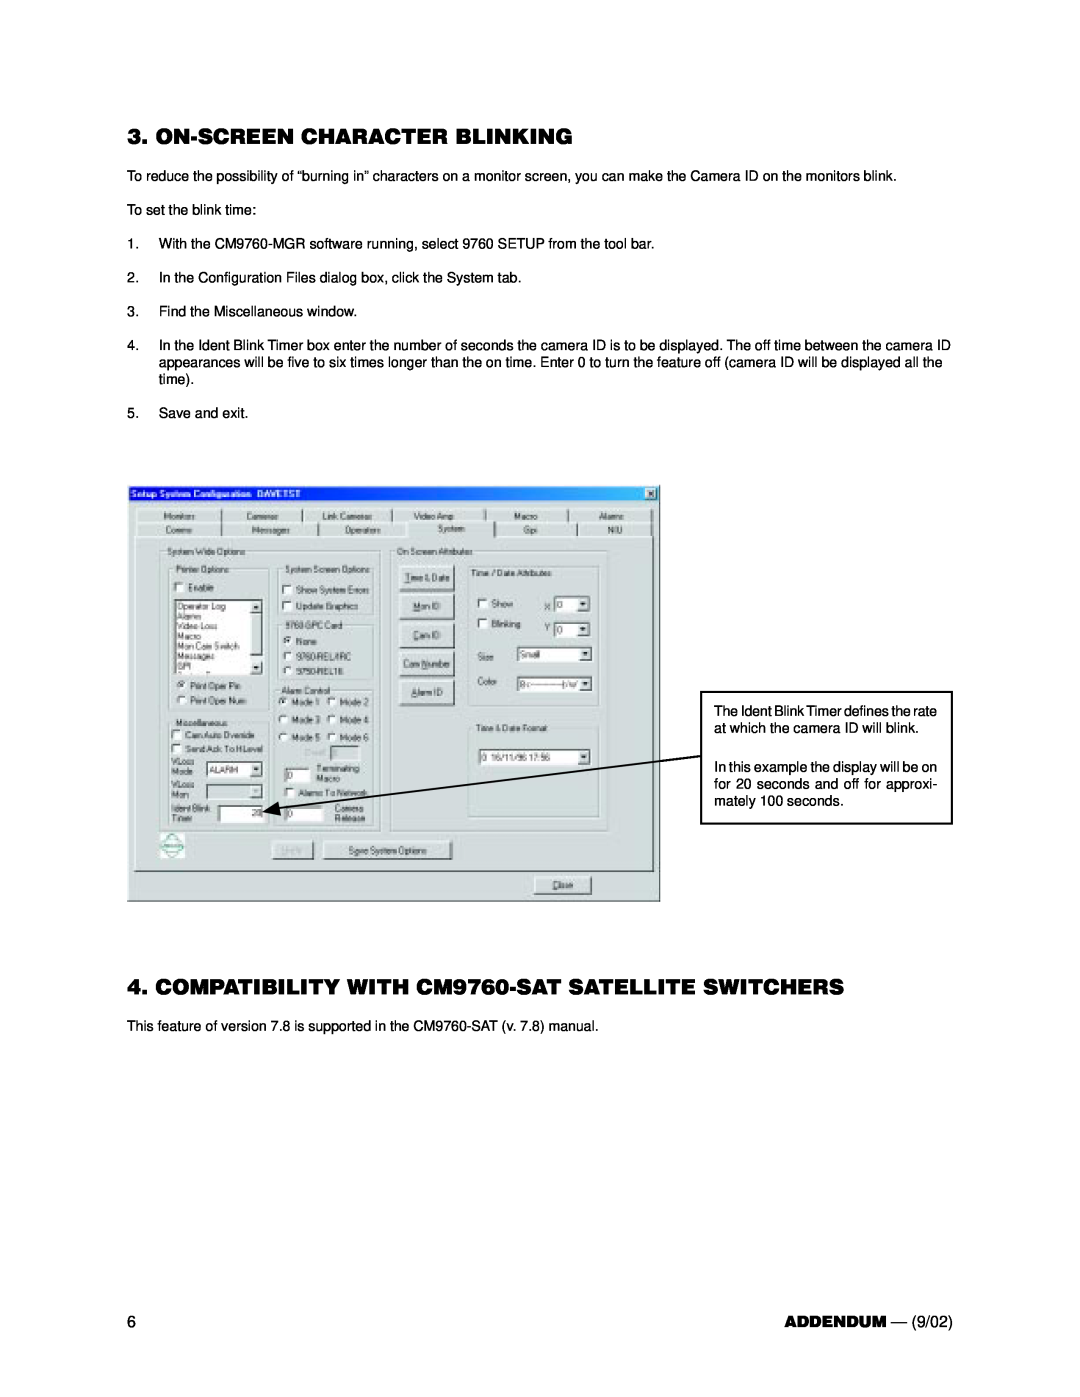 Pelco CM9760-MGR user manual On-Screencharacter Blinking, ADDENDUM - 9/02 